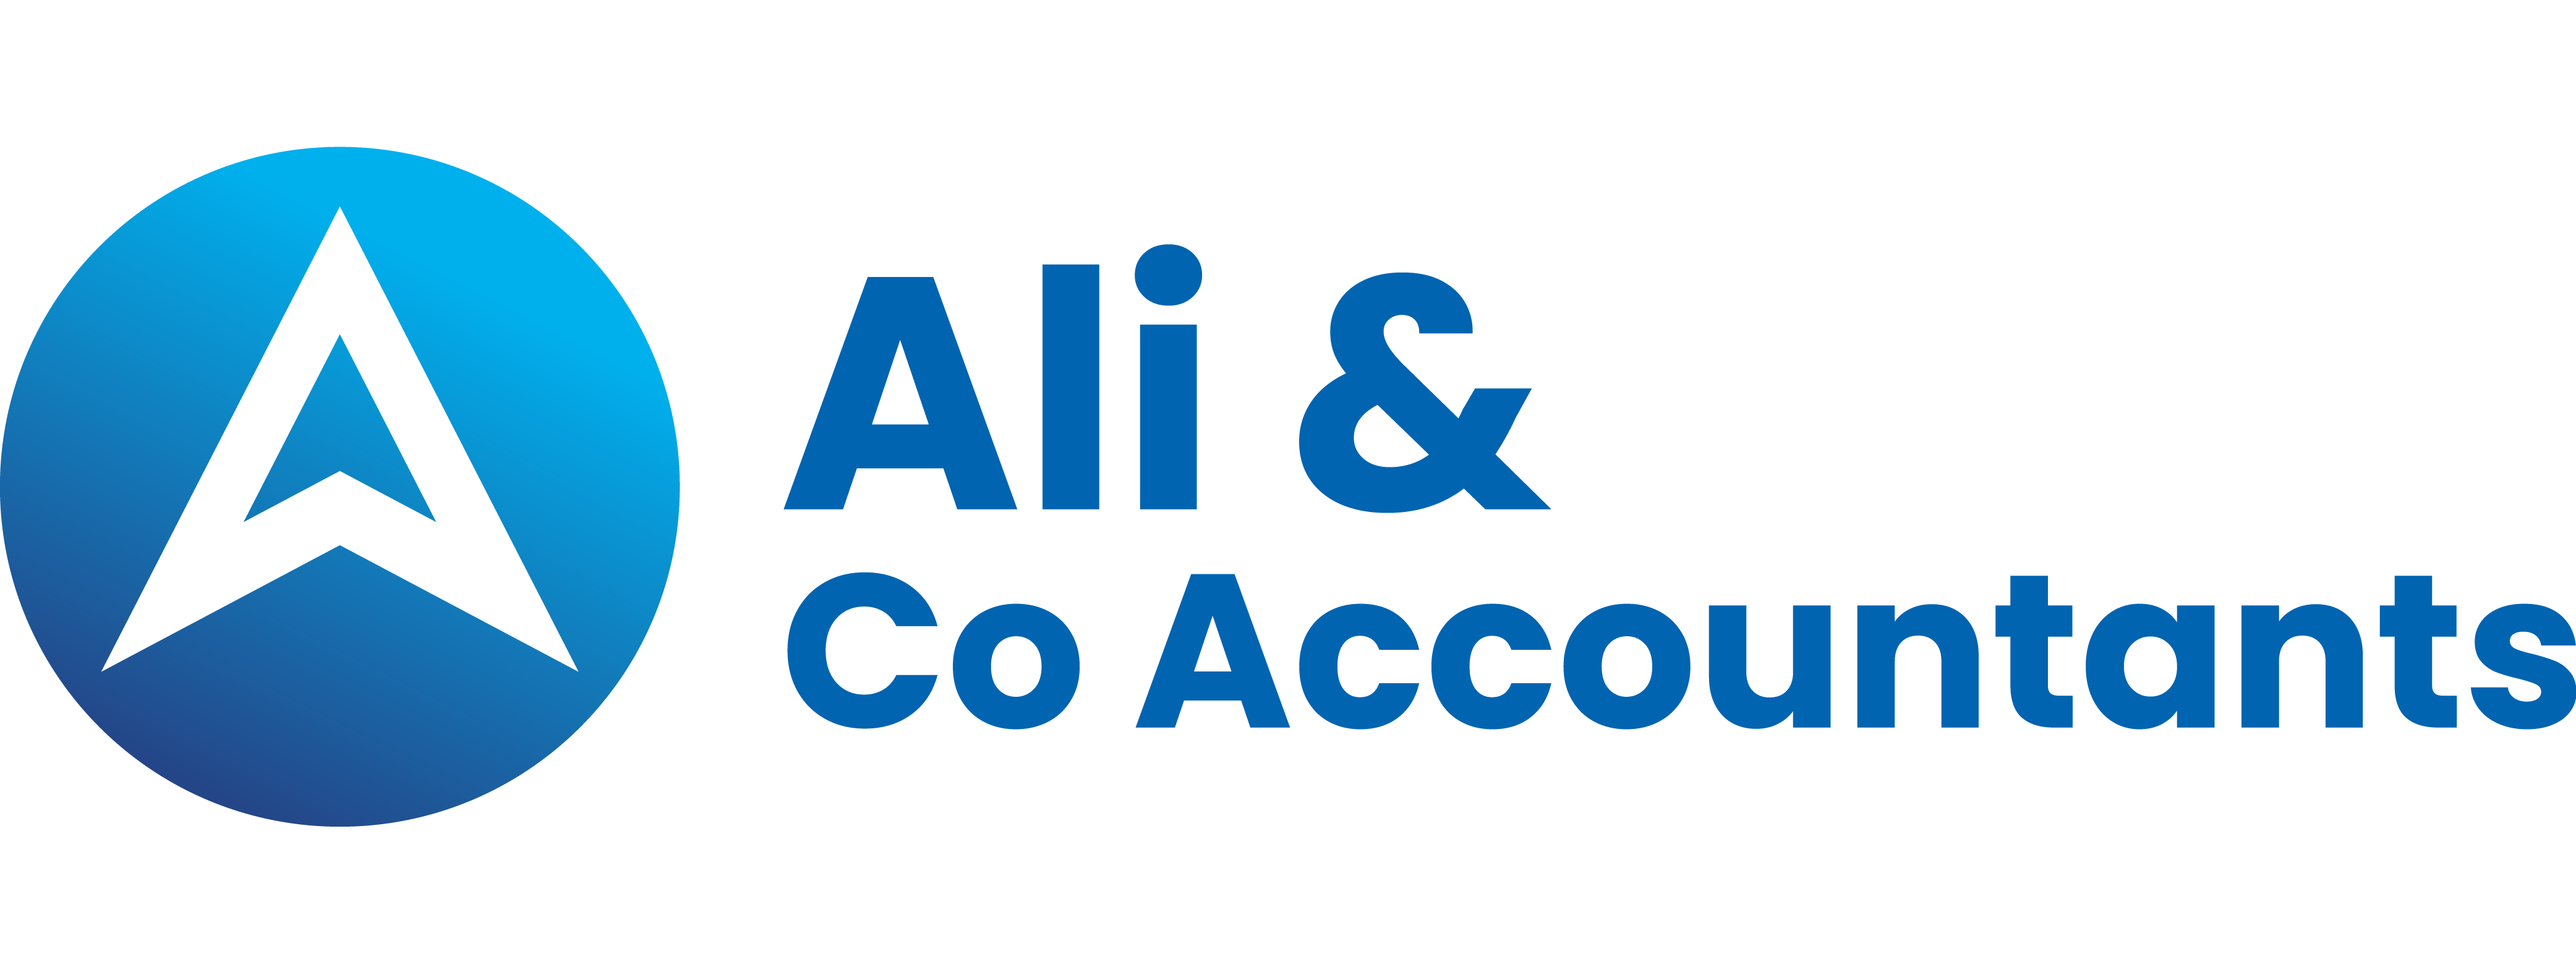 Ali & Co Accountants